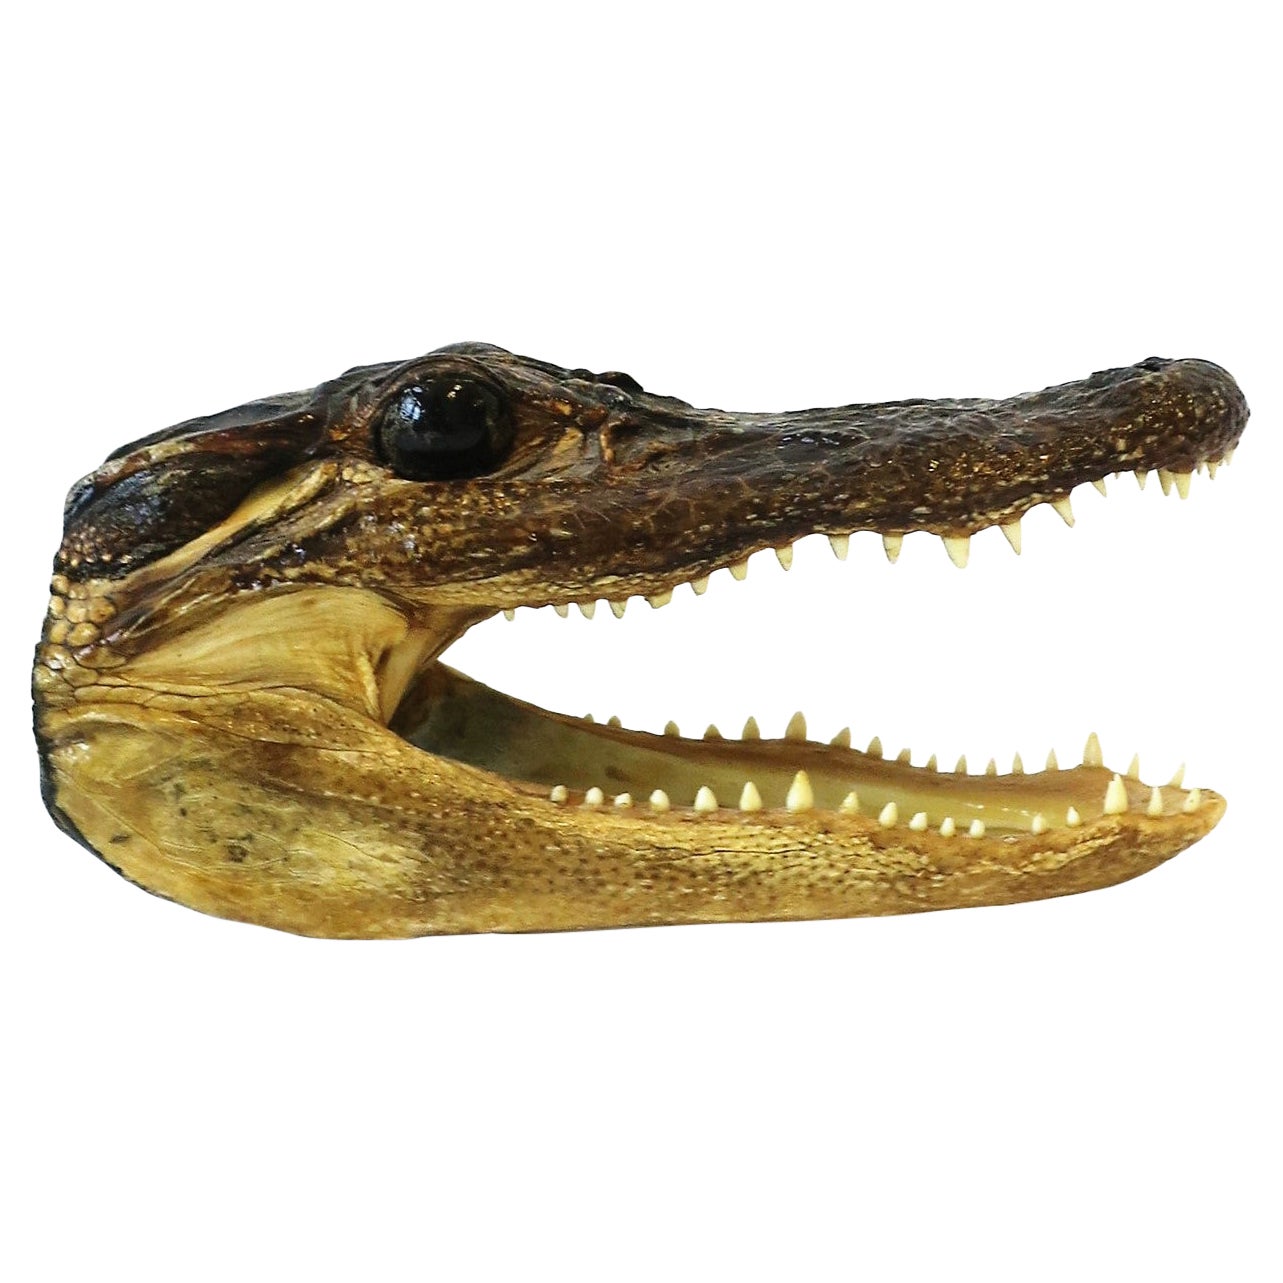 Alligator Reptile Taxidermy Decorative Object Sculpture